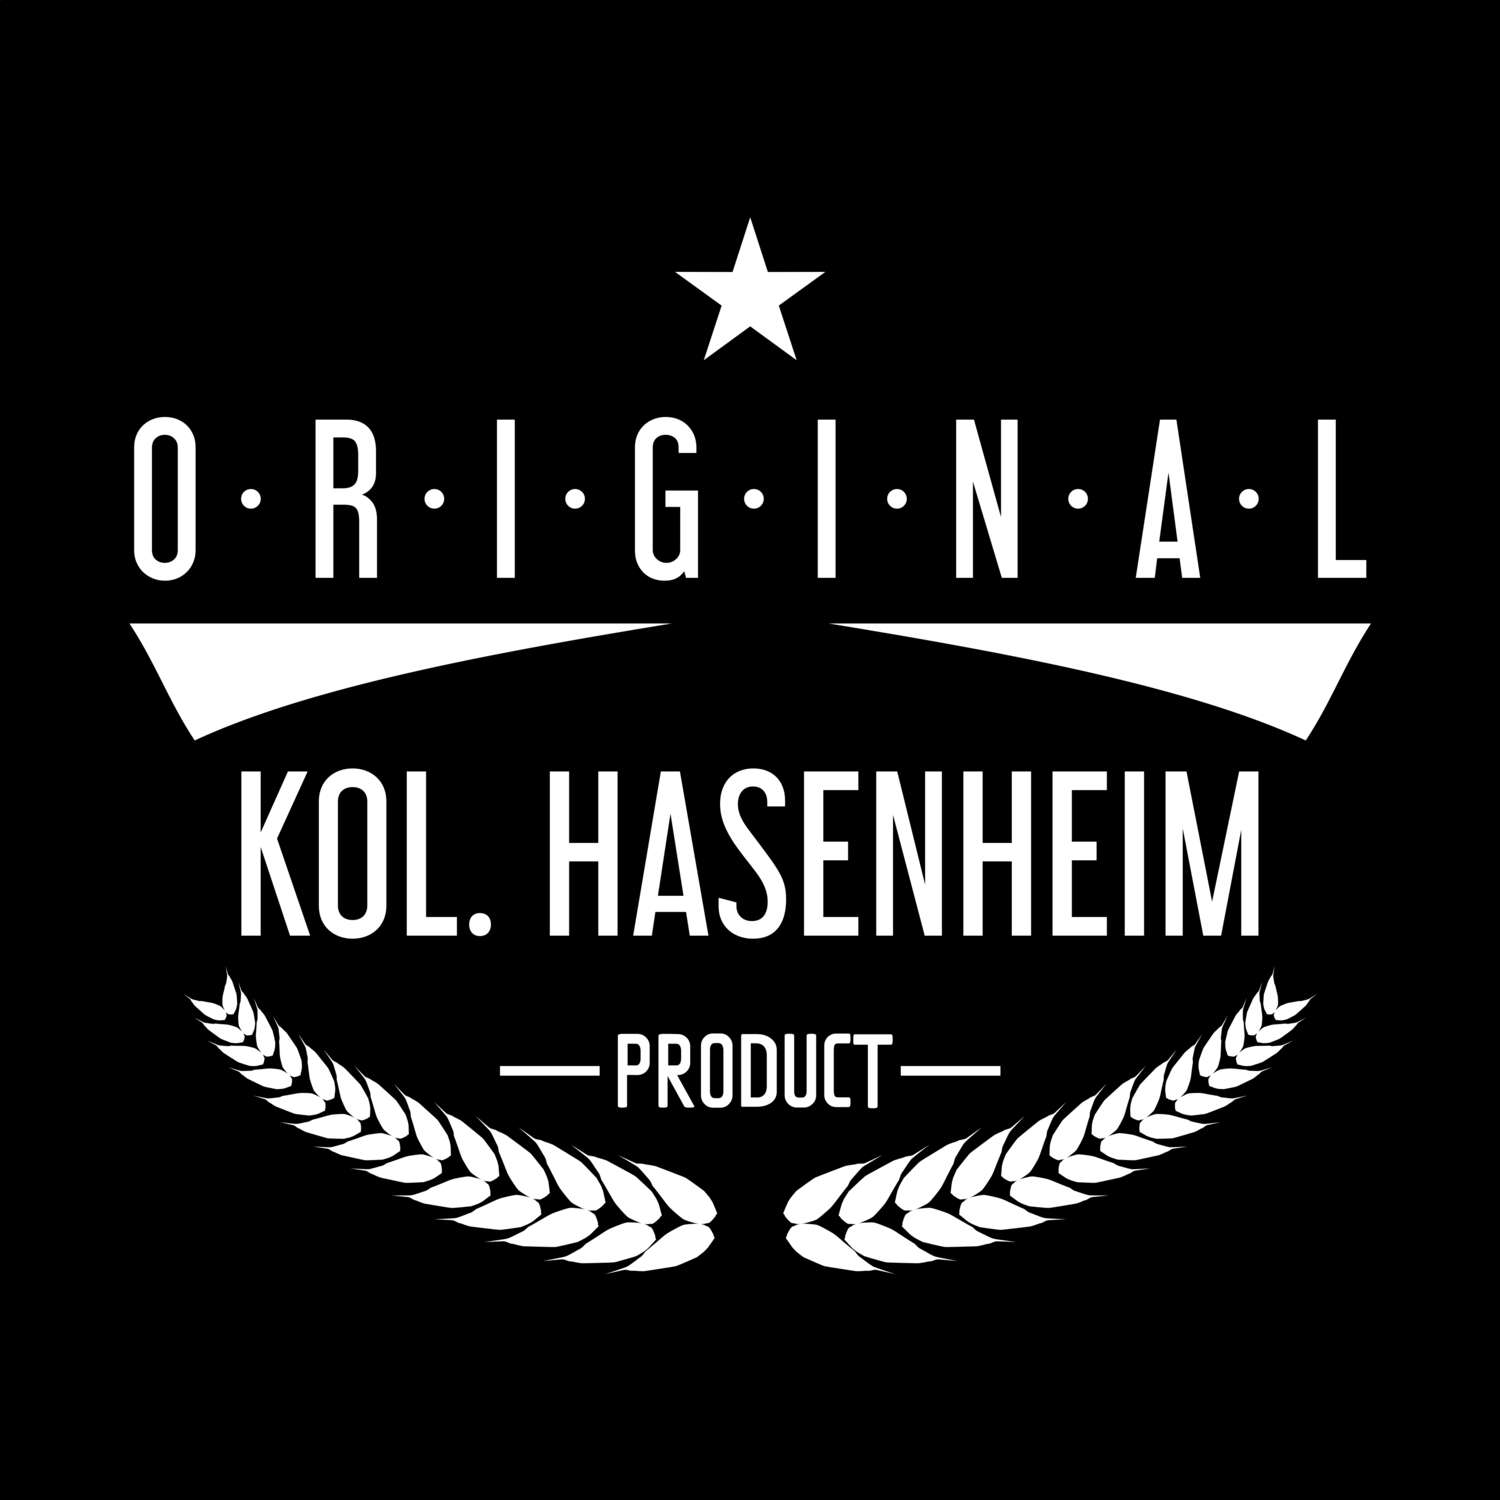 Kol. Hasenheim T-Shirt »Original Product«